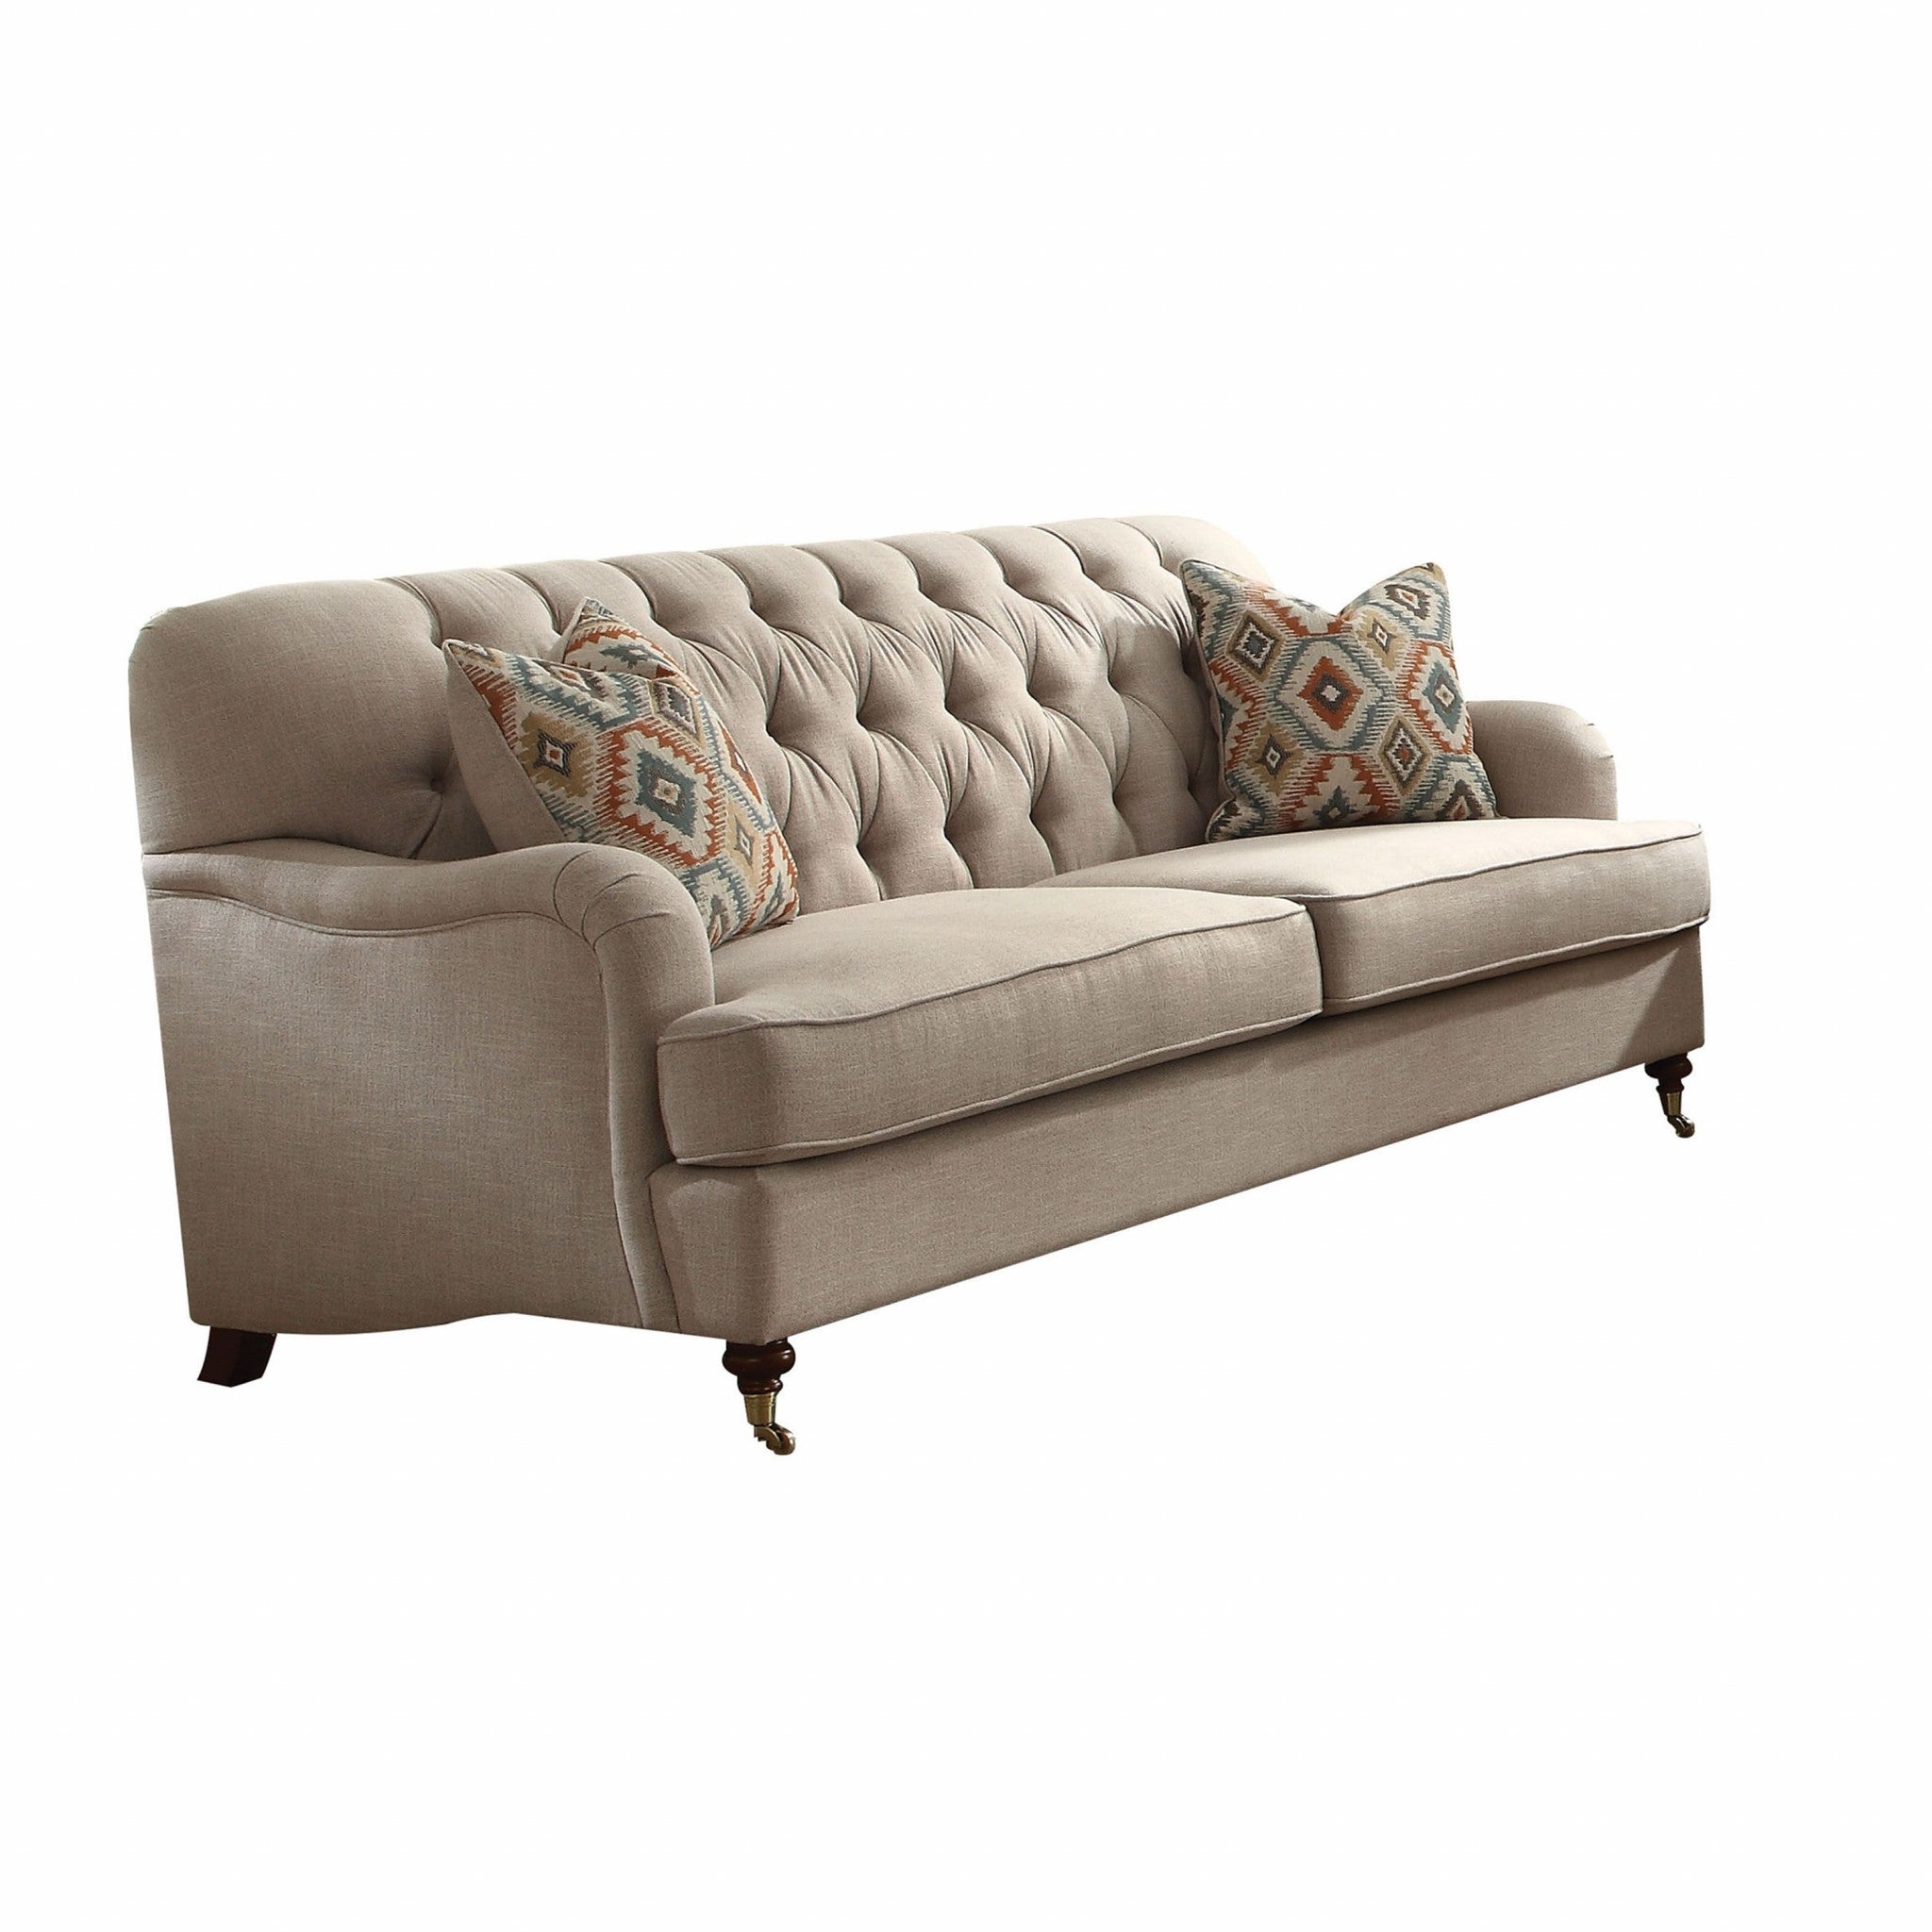 38" X 85" X 37" Beige Fabric Upholstery Sofa w2 Pillows